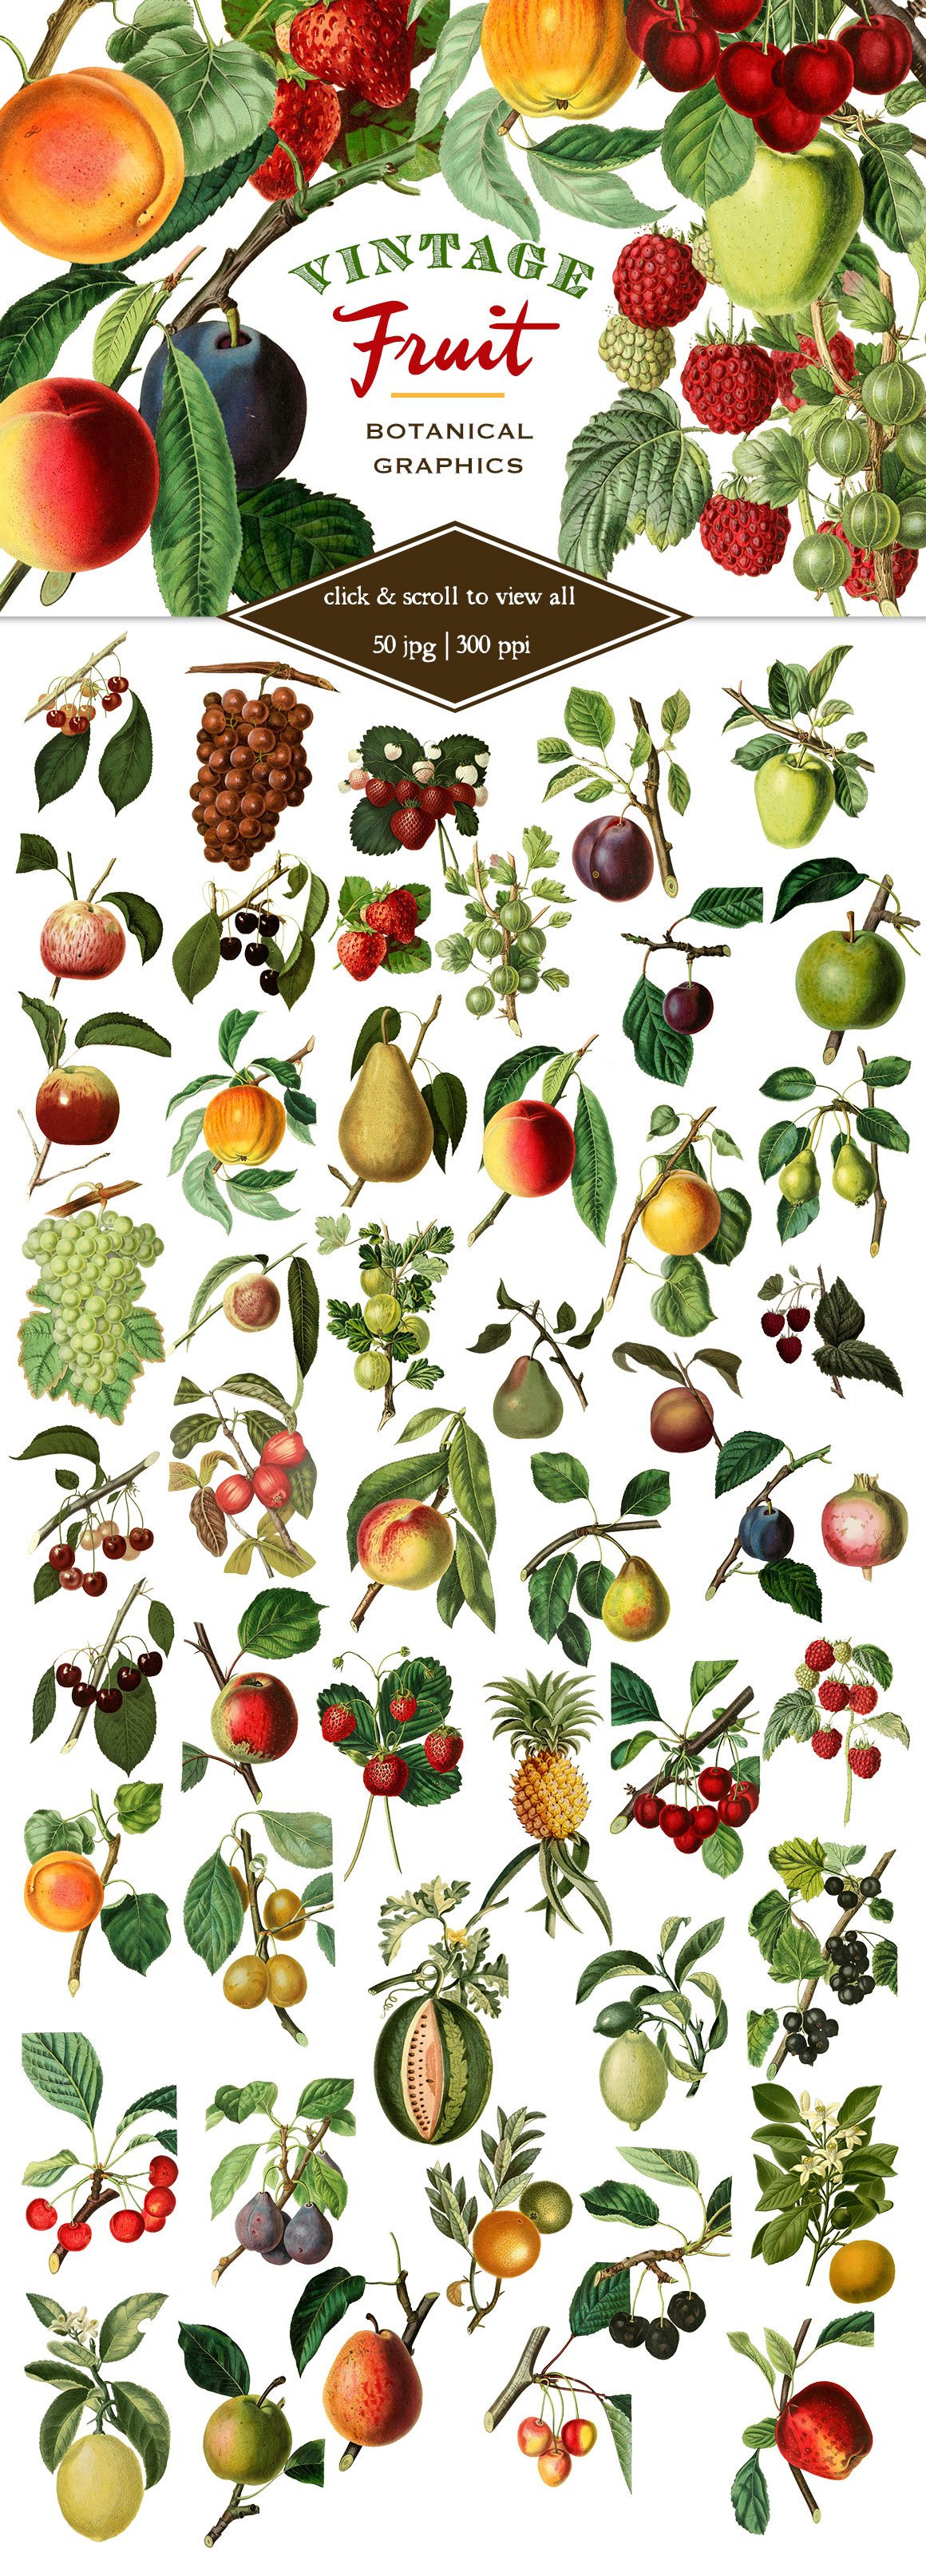 Vintage Fruit Botanical Graphics cover image.